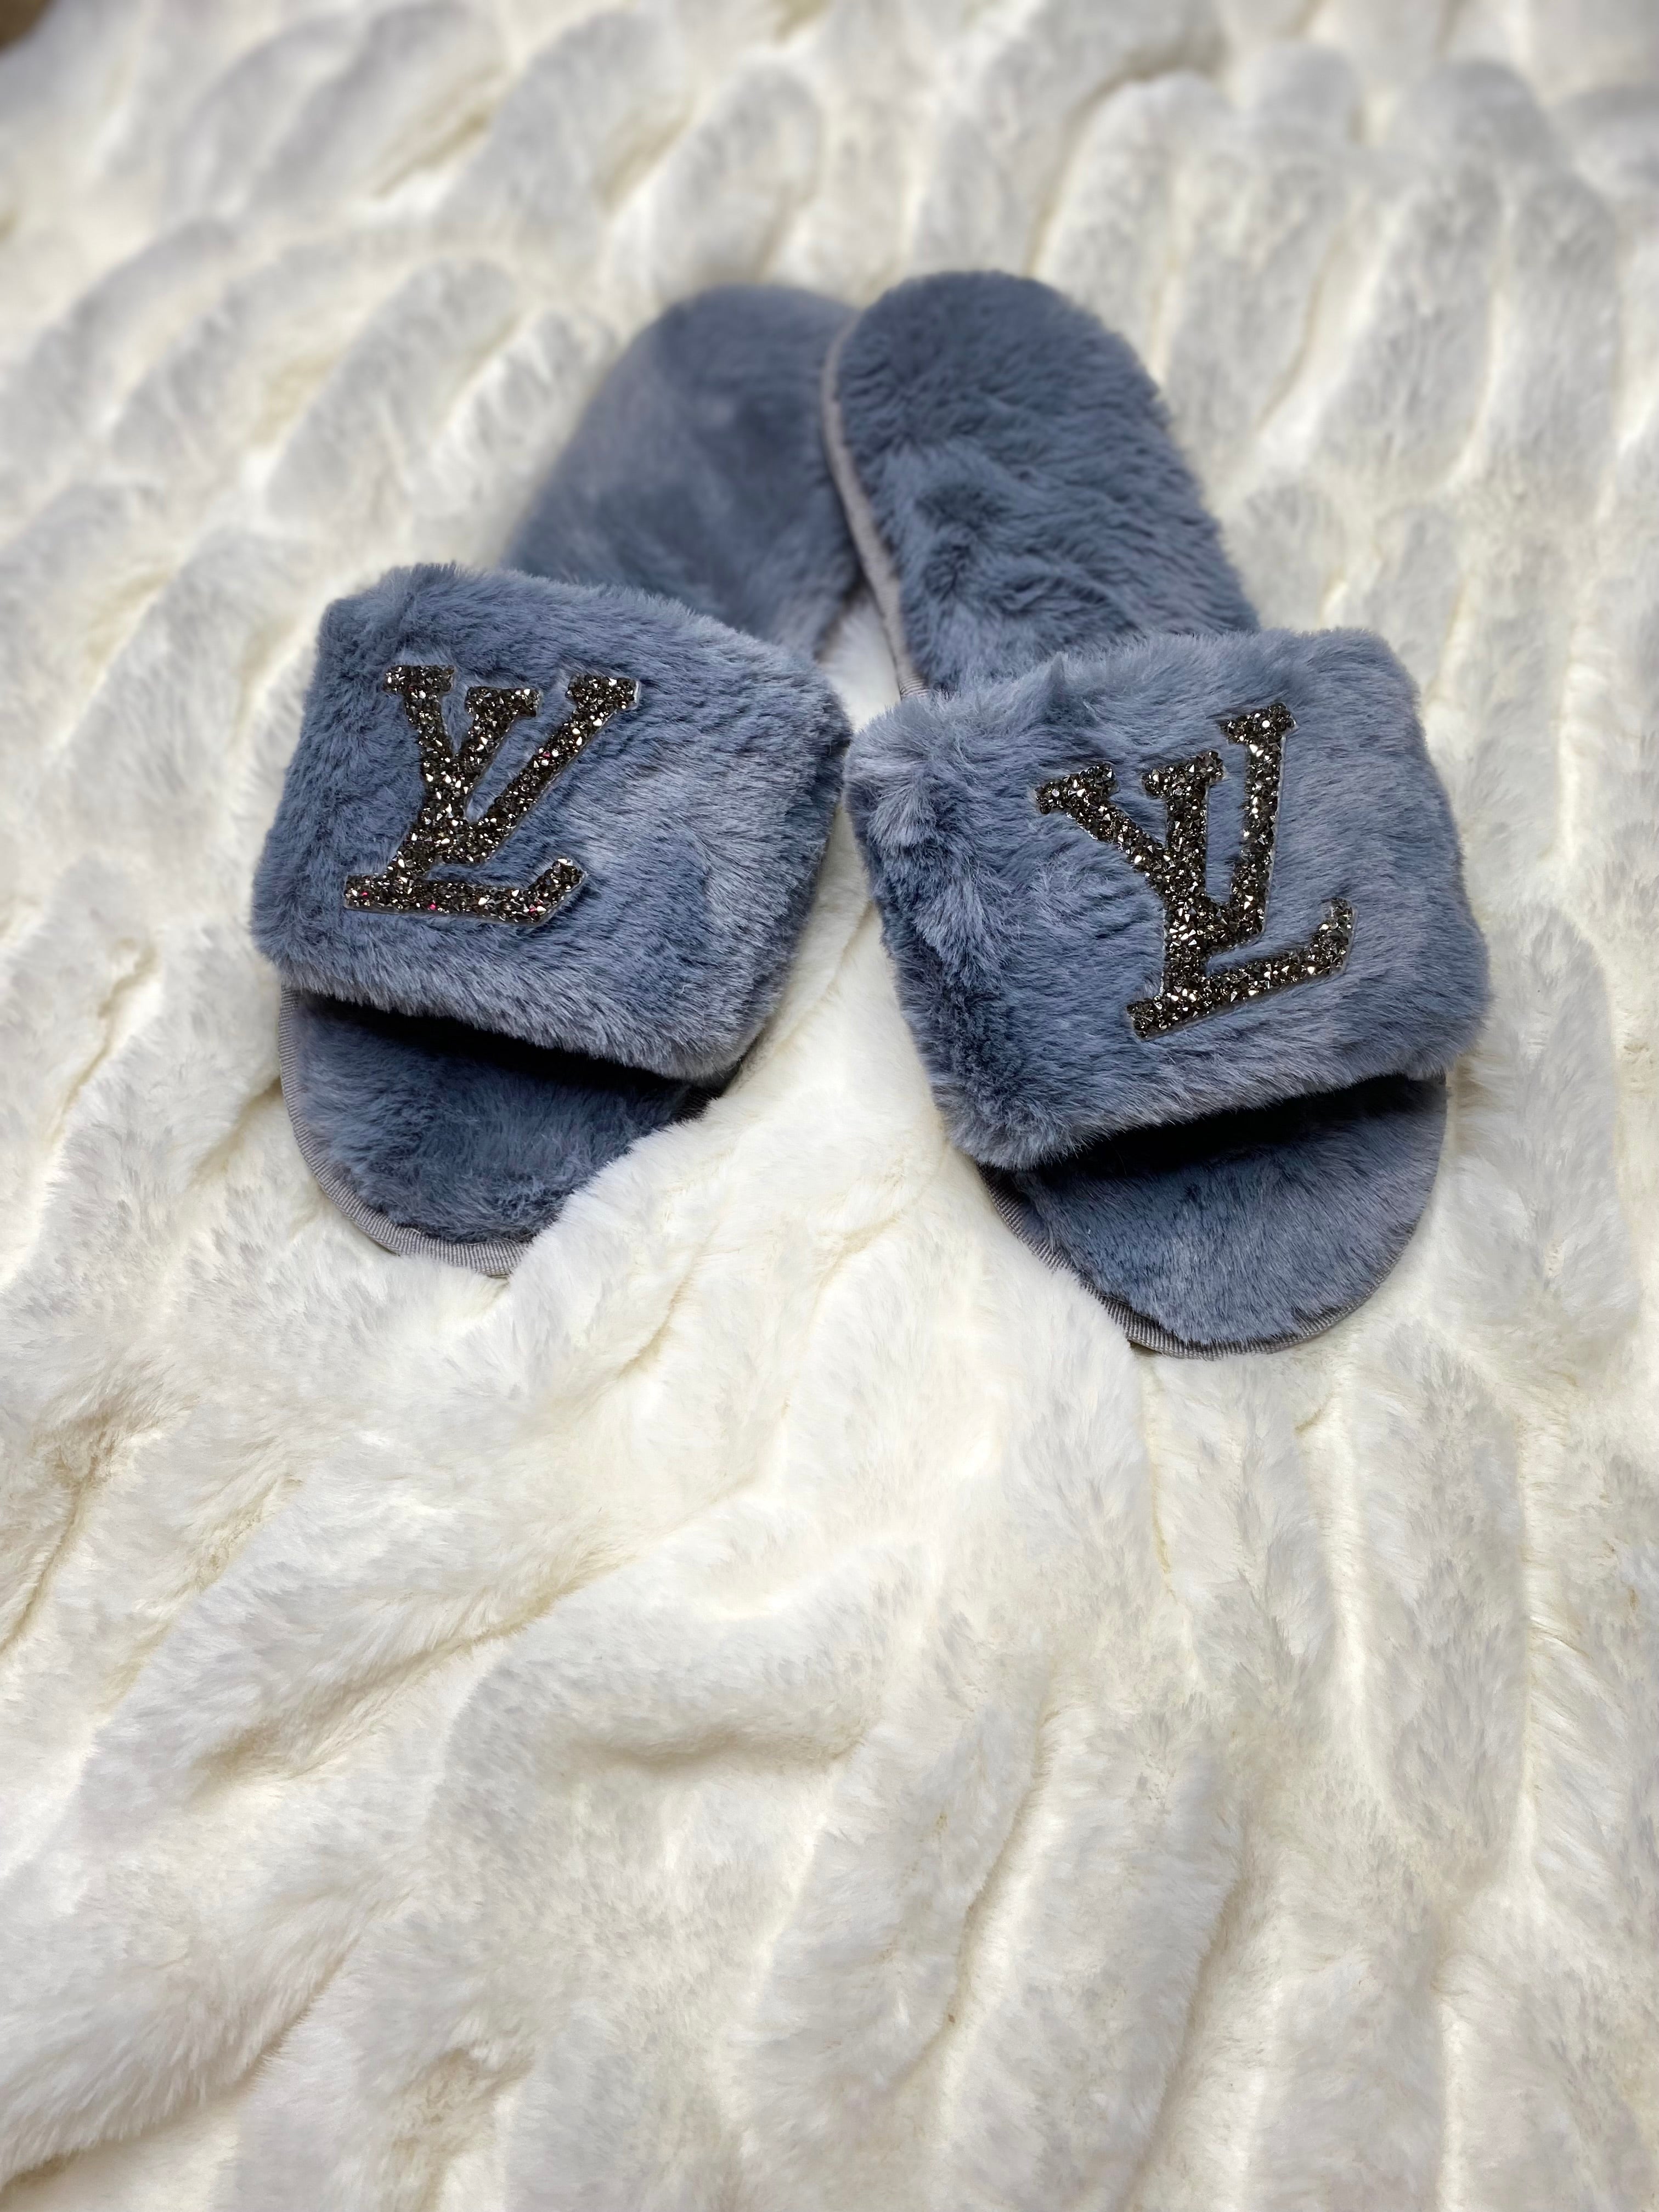 Louis Vuitton Slippers Fuzzy